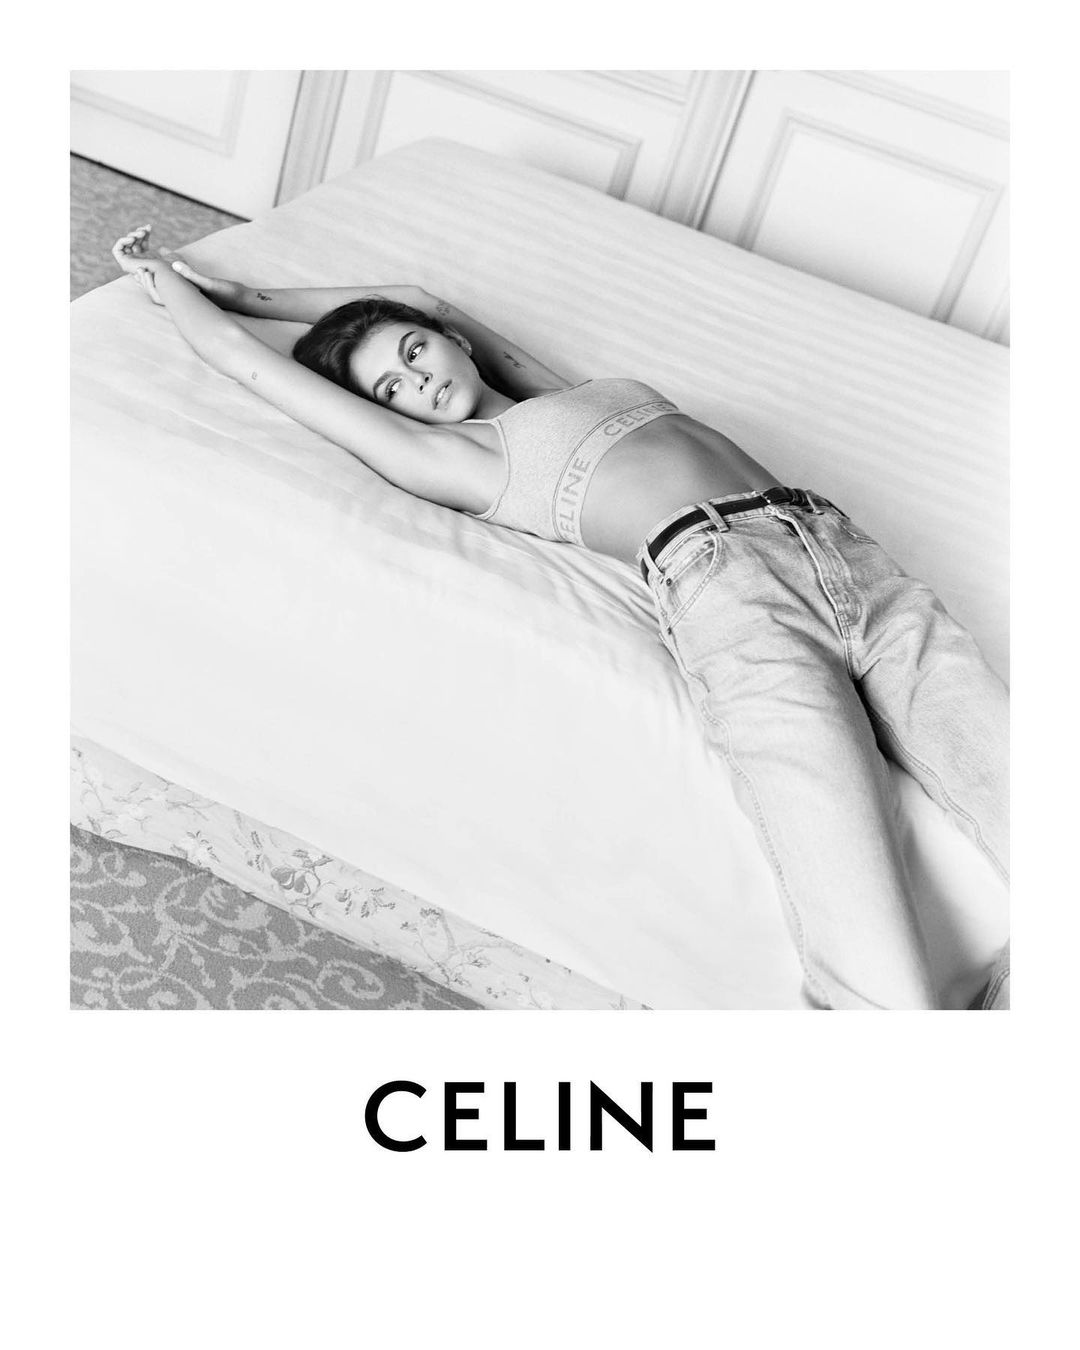 Kaia Gerber by Hedi Slimane for Celine S/S 2021